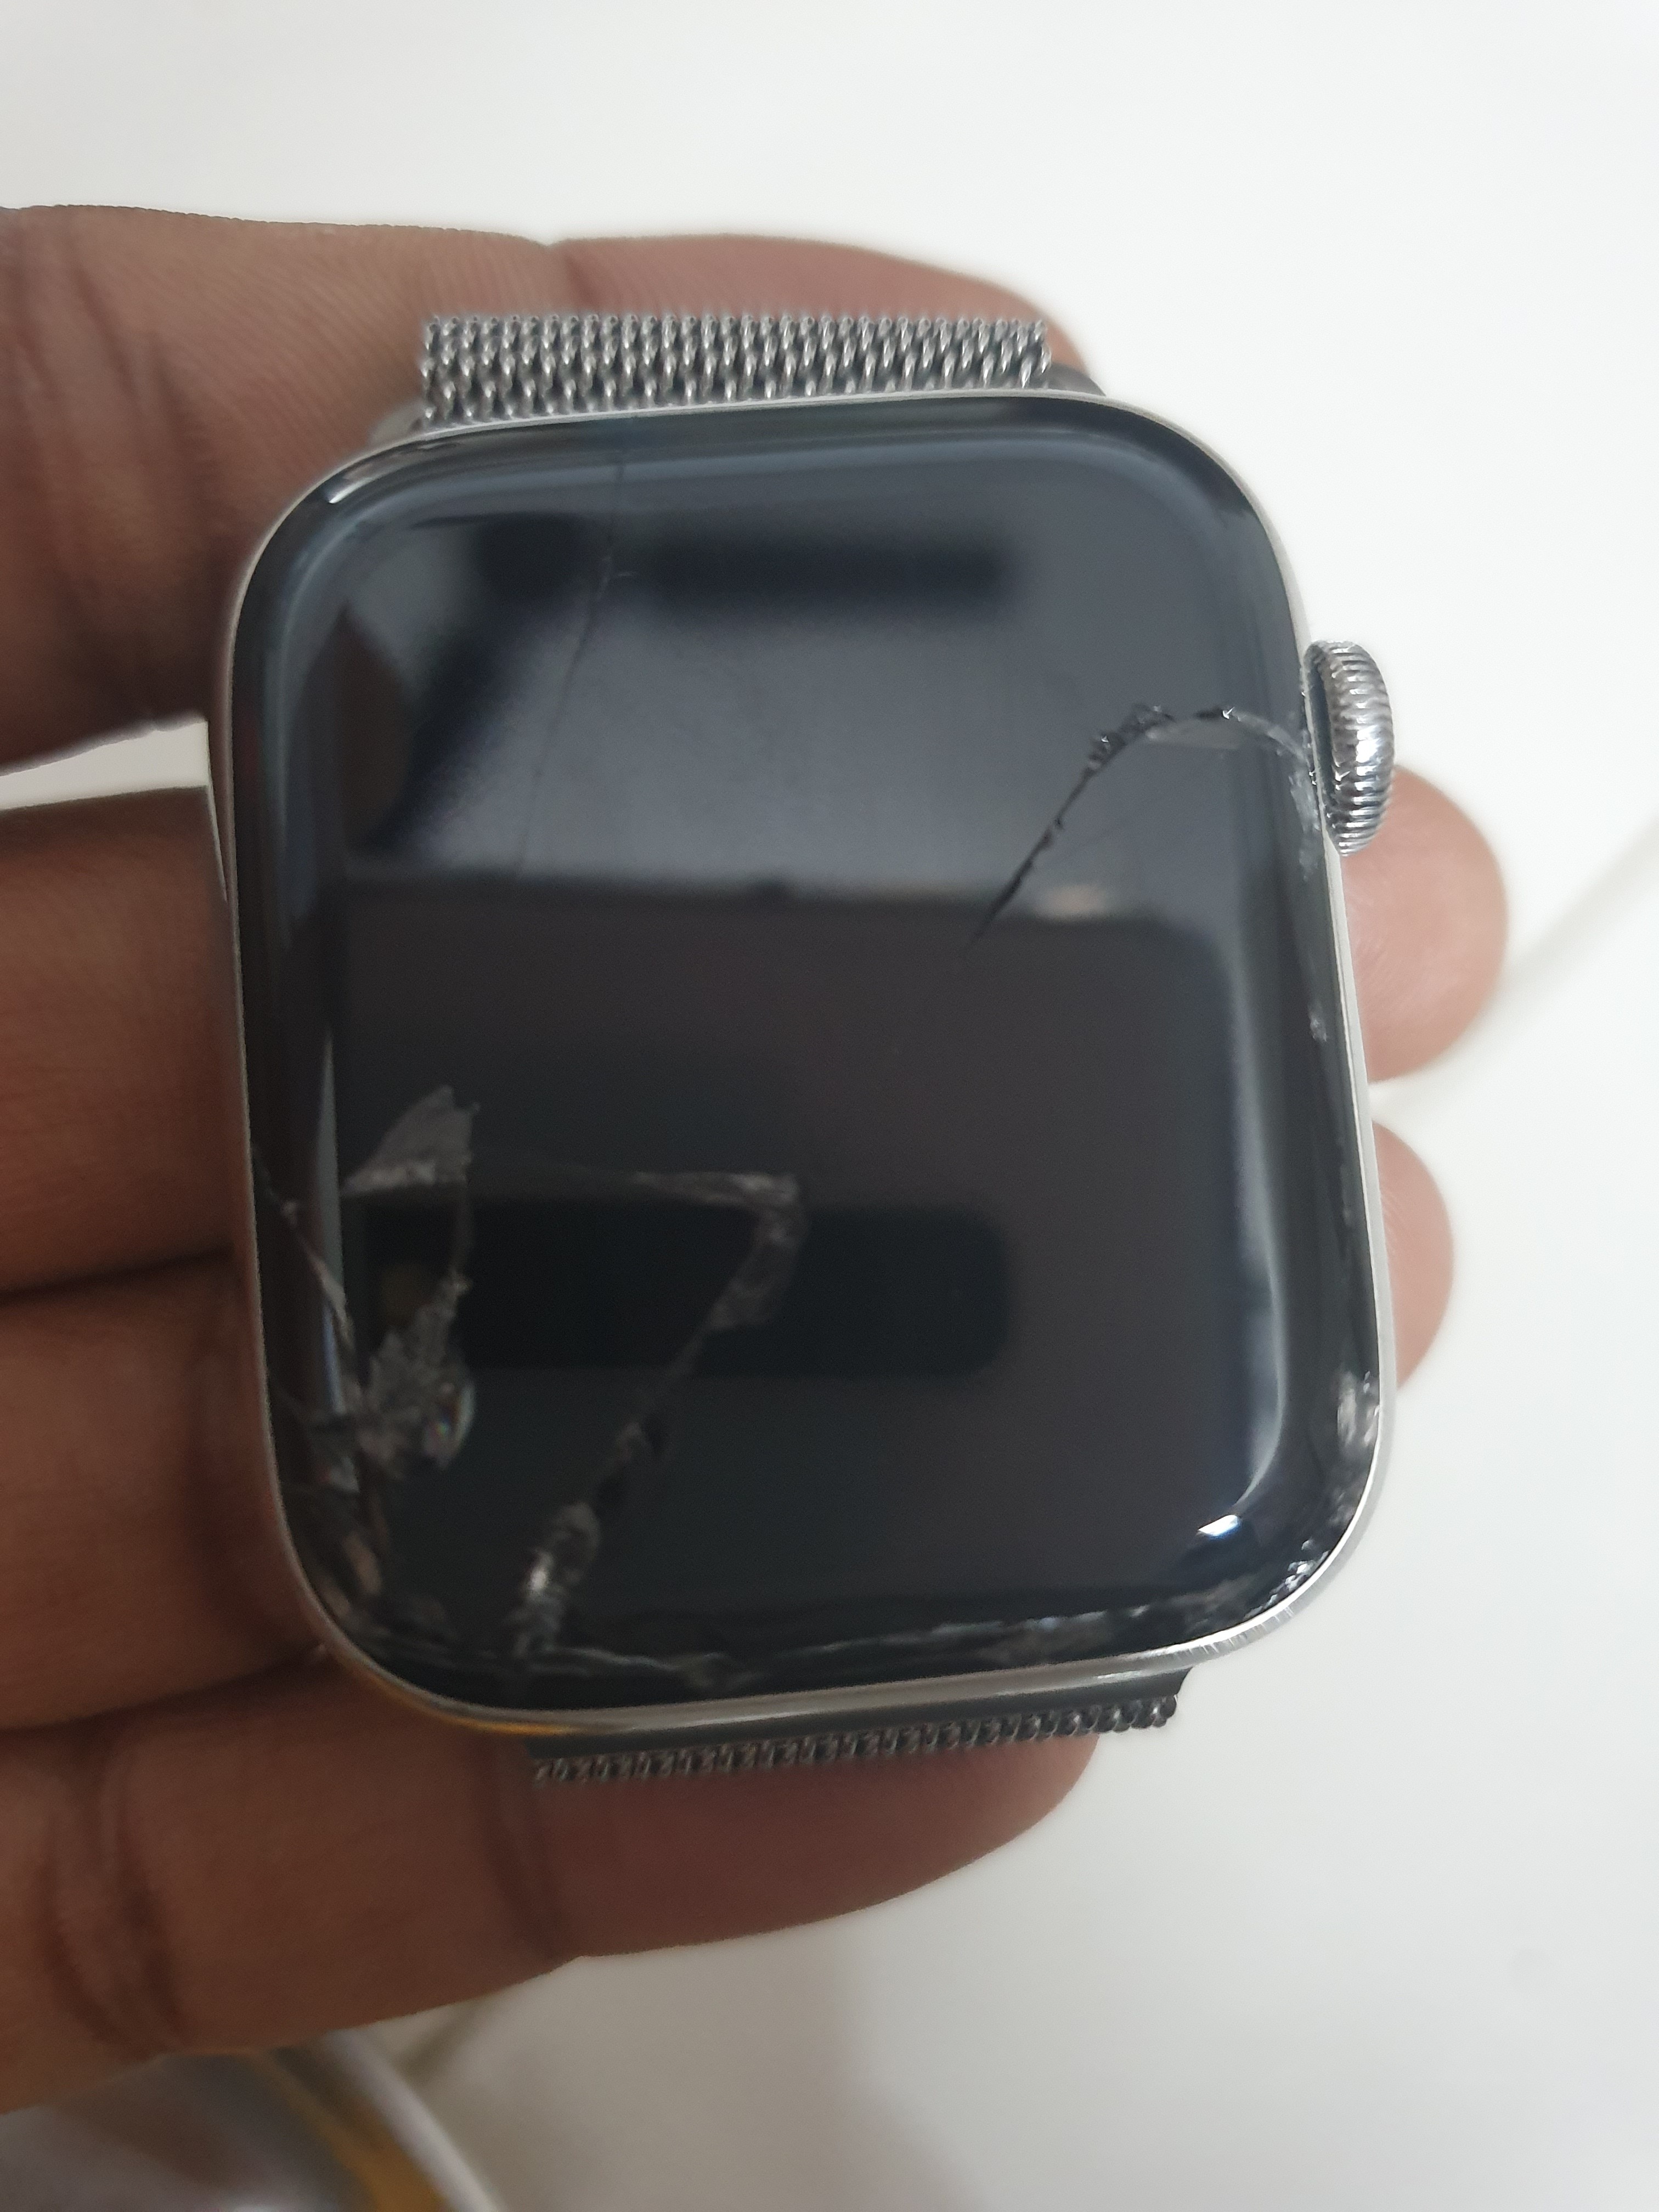 I broken iwatch series 4 glass - Apple 